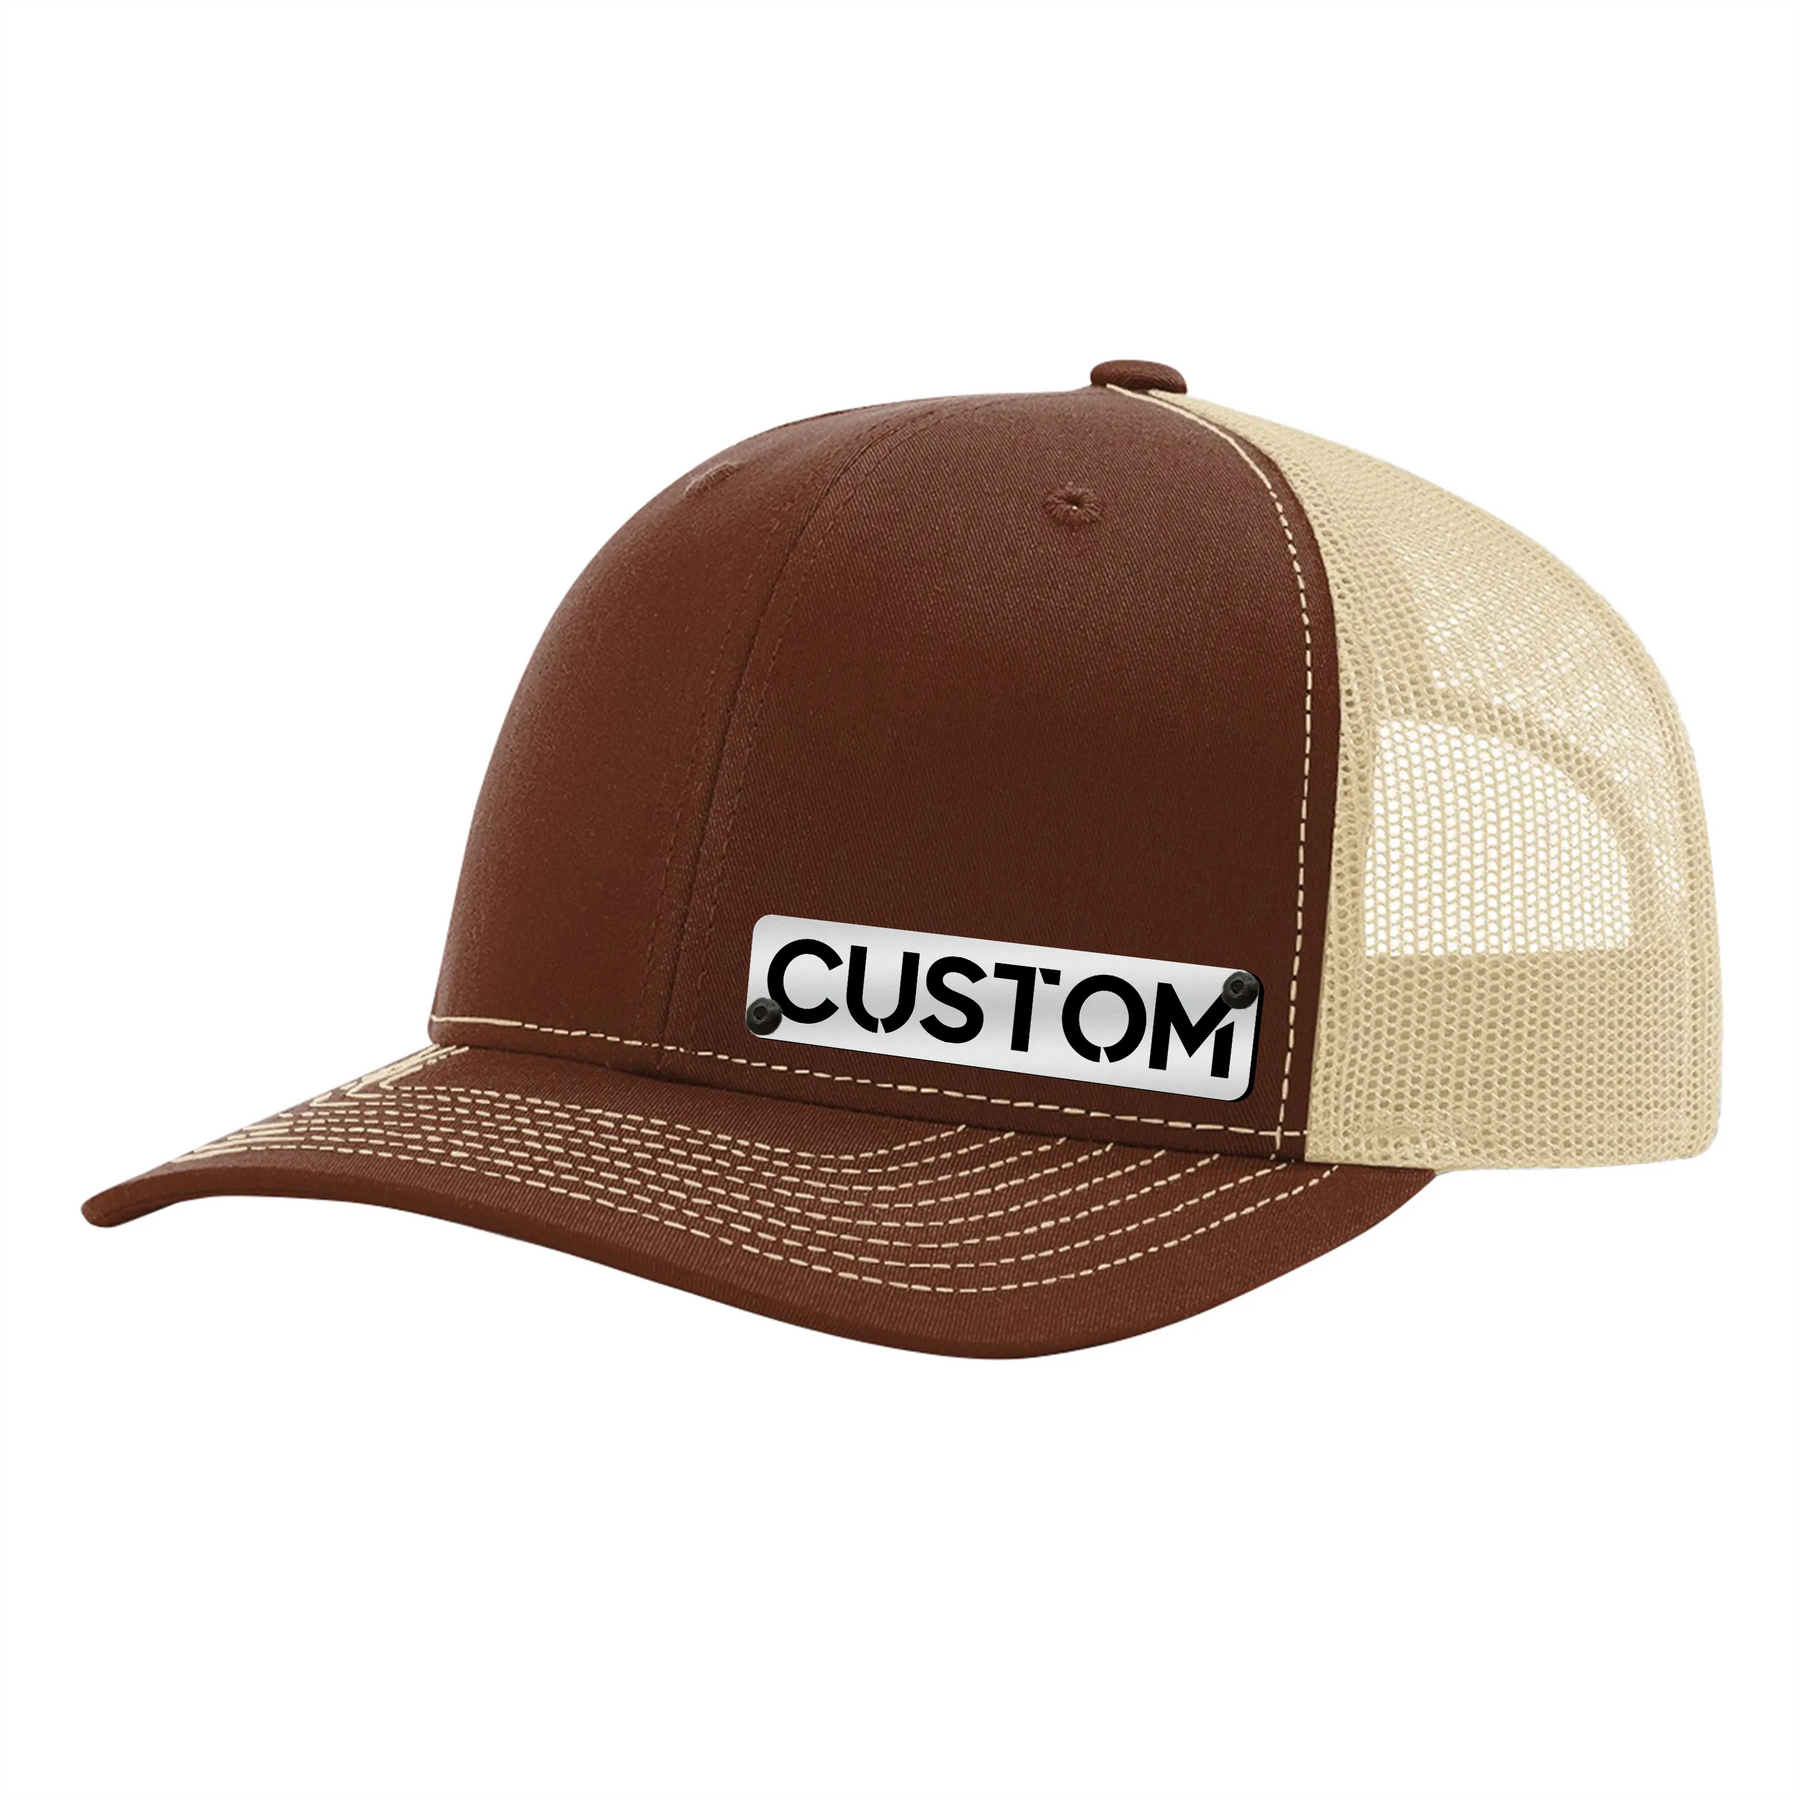 Custom Badge Hat - Trucker Snapback - Black and Brushed Silver Badge - Upload Your Own